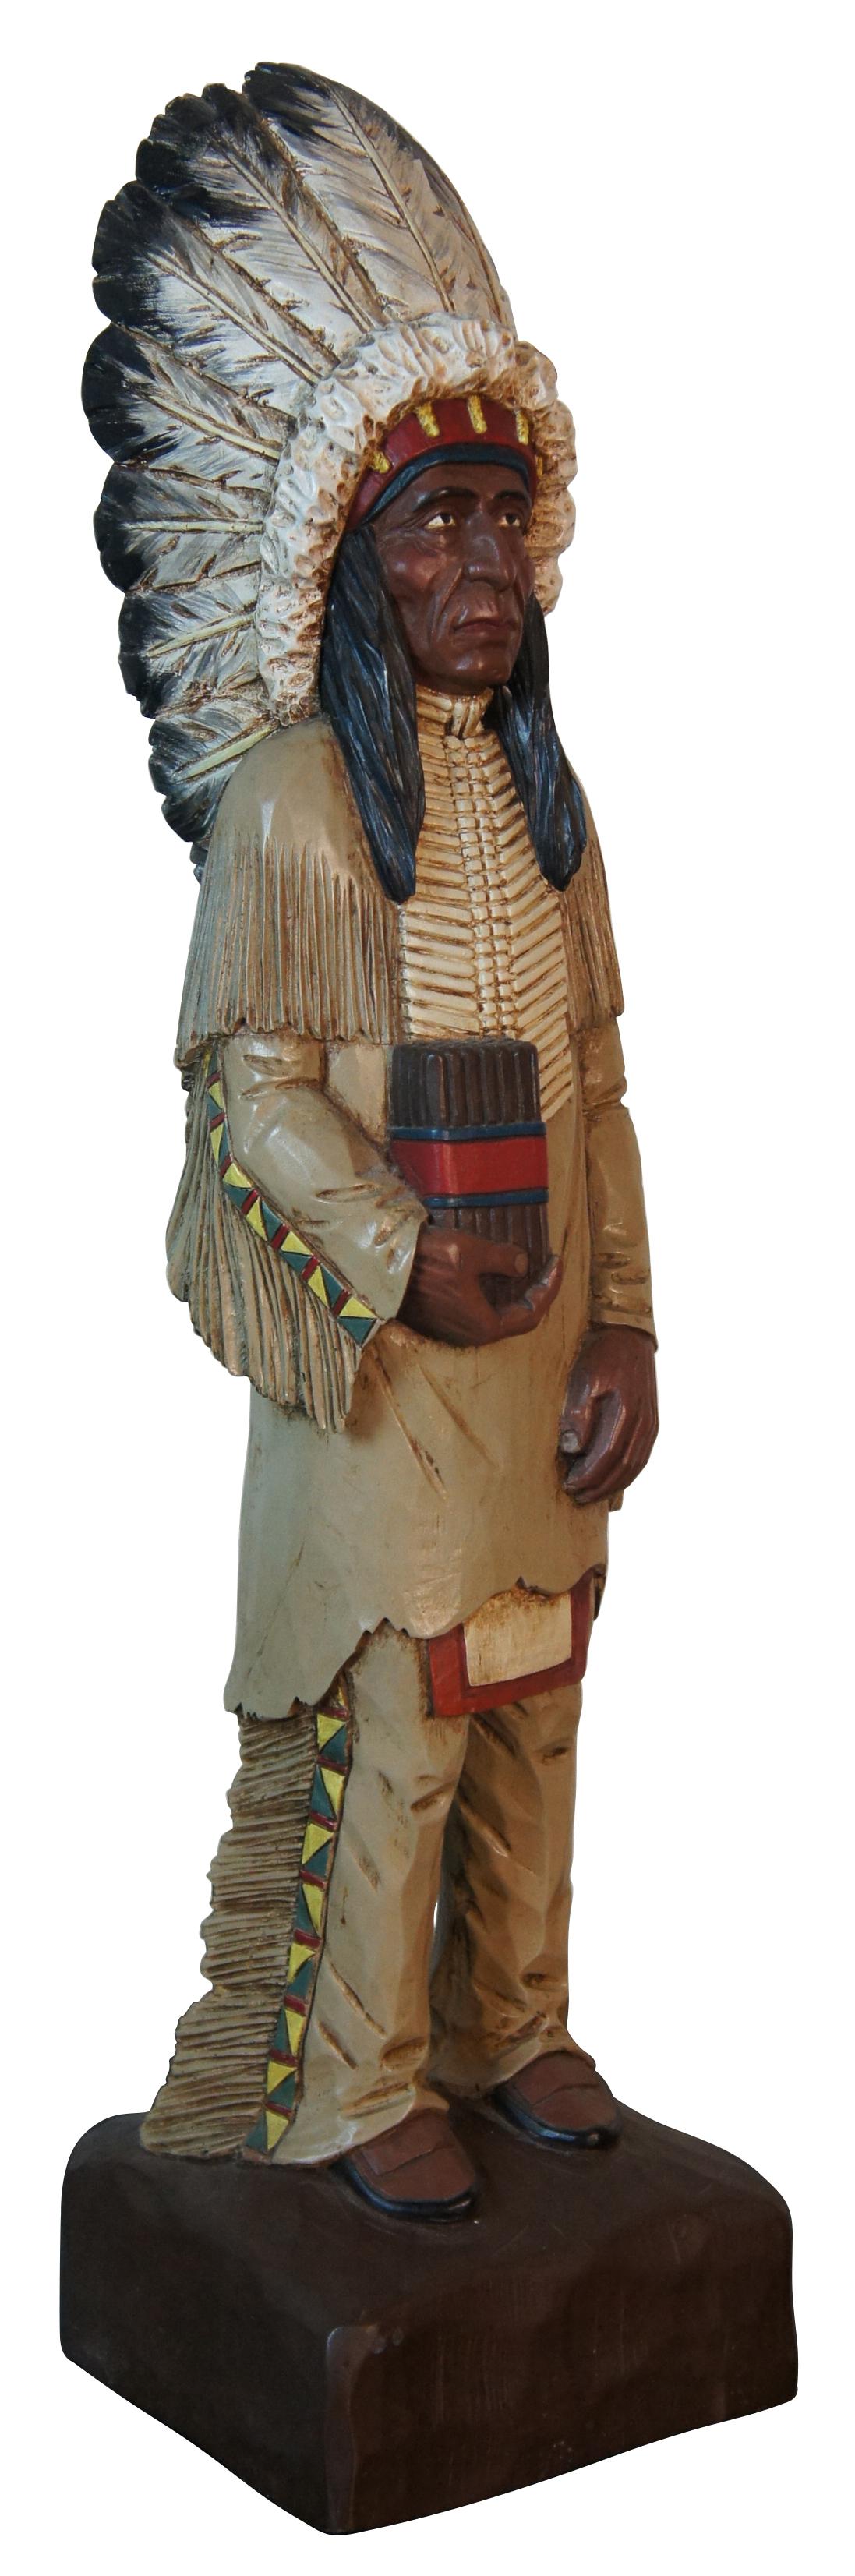 Folk Art 1988 Hand Carved Cigar Store Indian Chief Sculpture Statue Figurine Tobacco